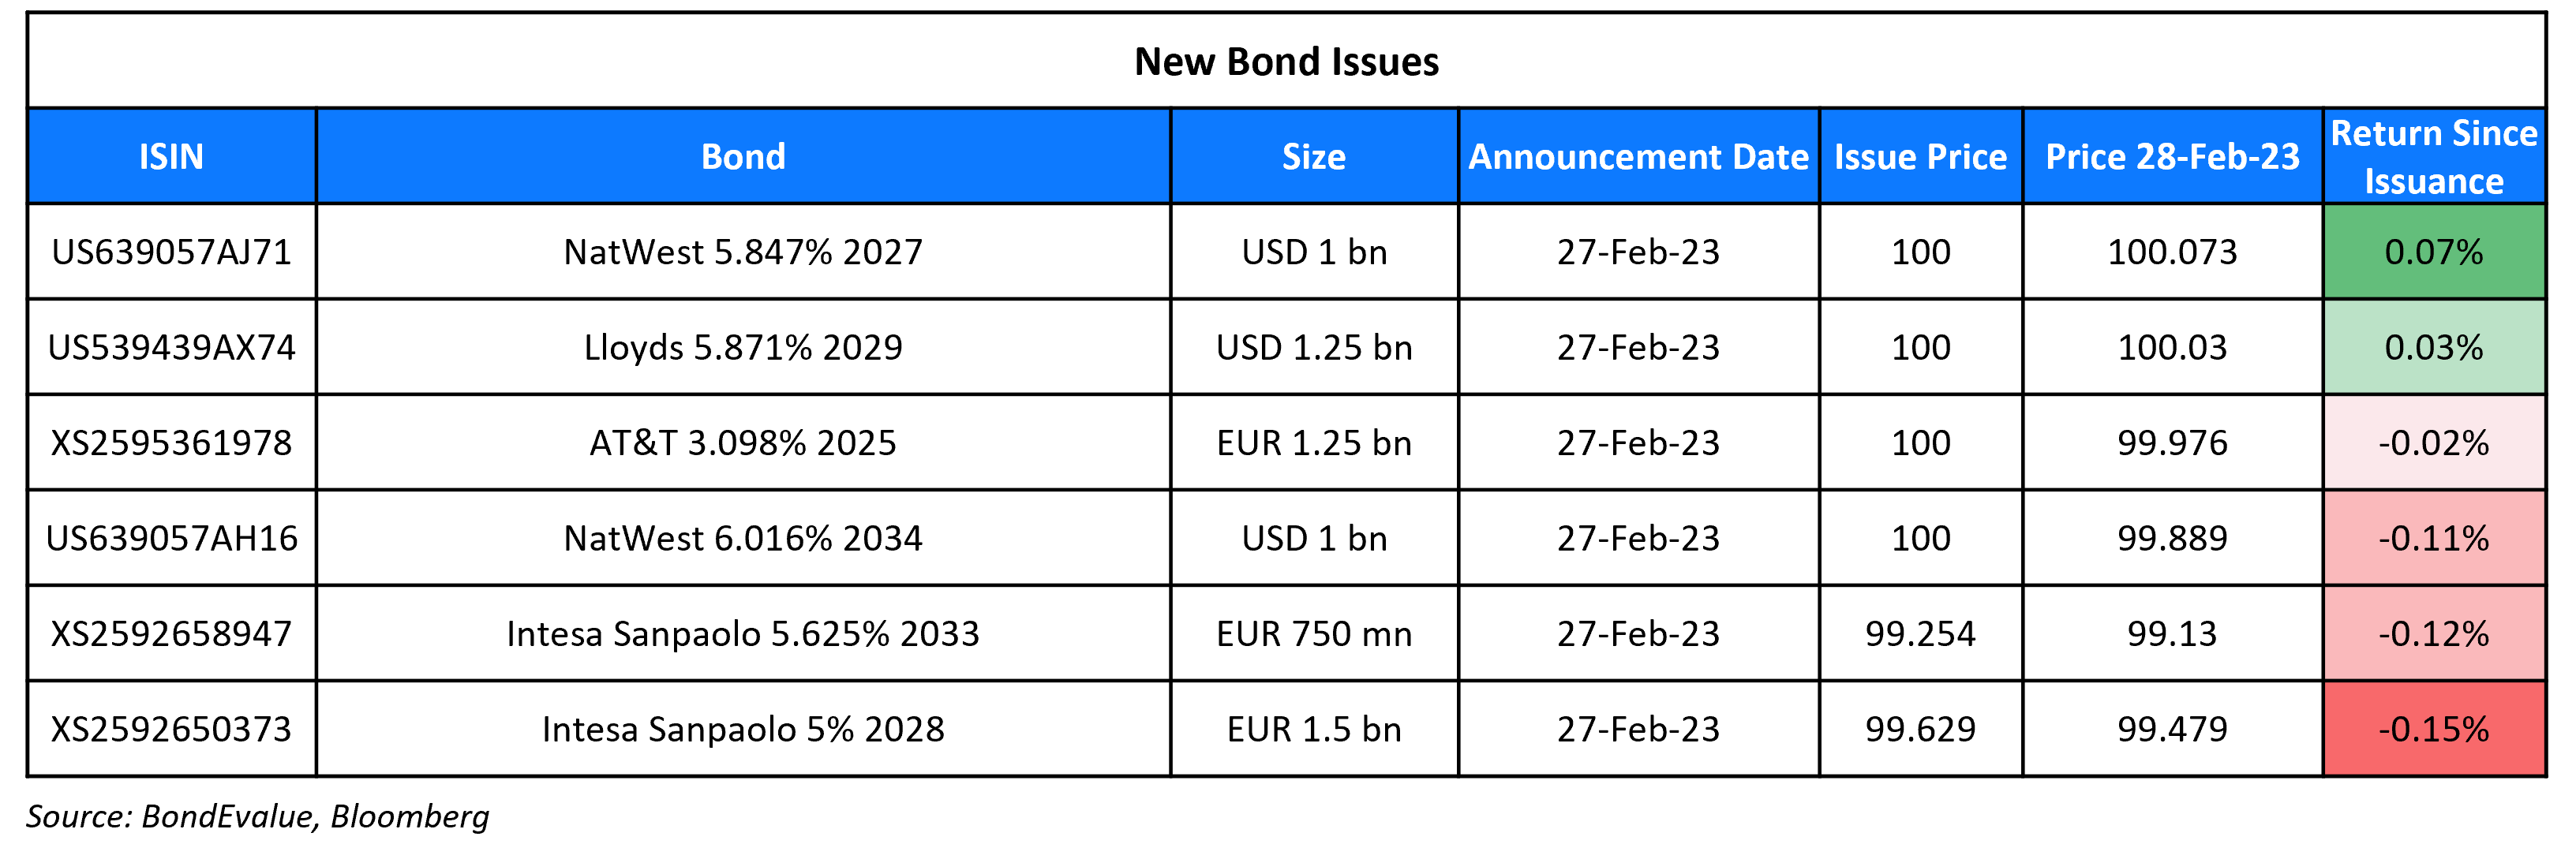 New Bond Issues 28 Feb 23